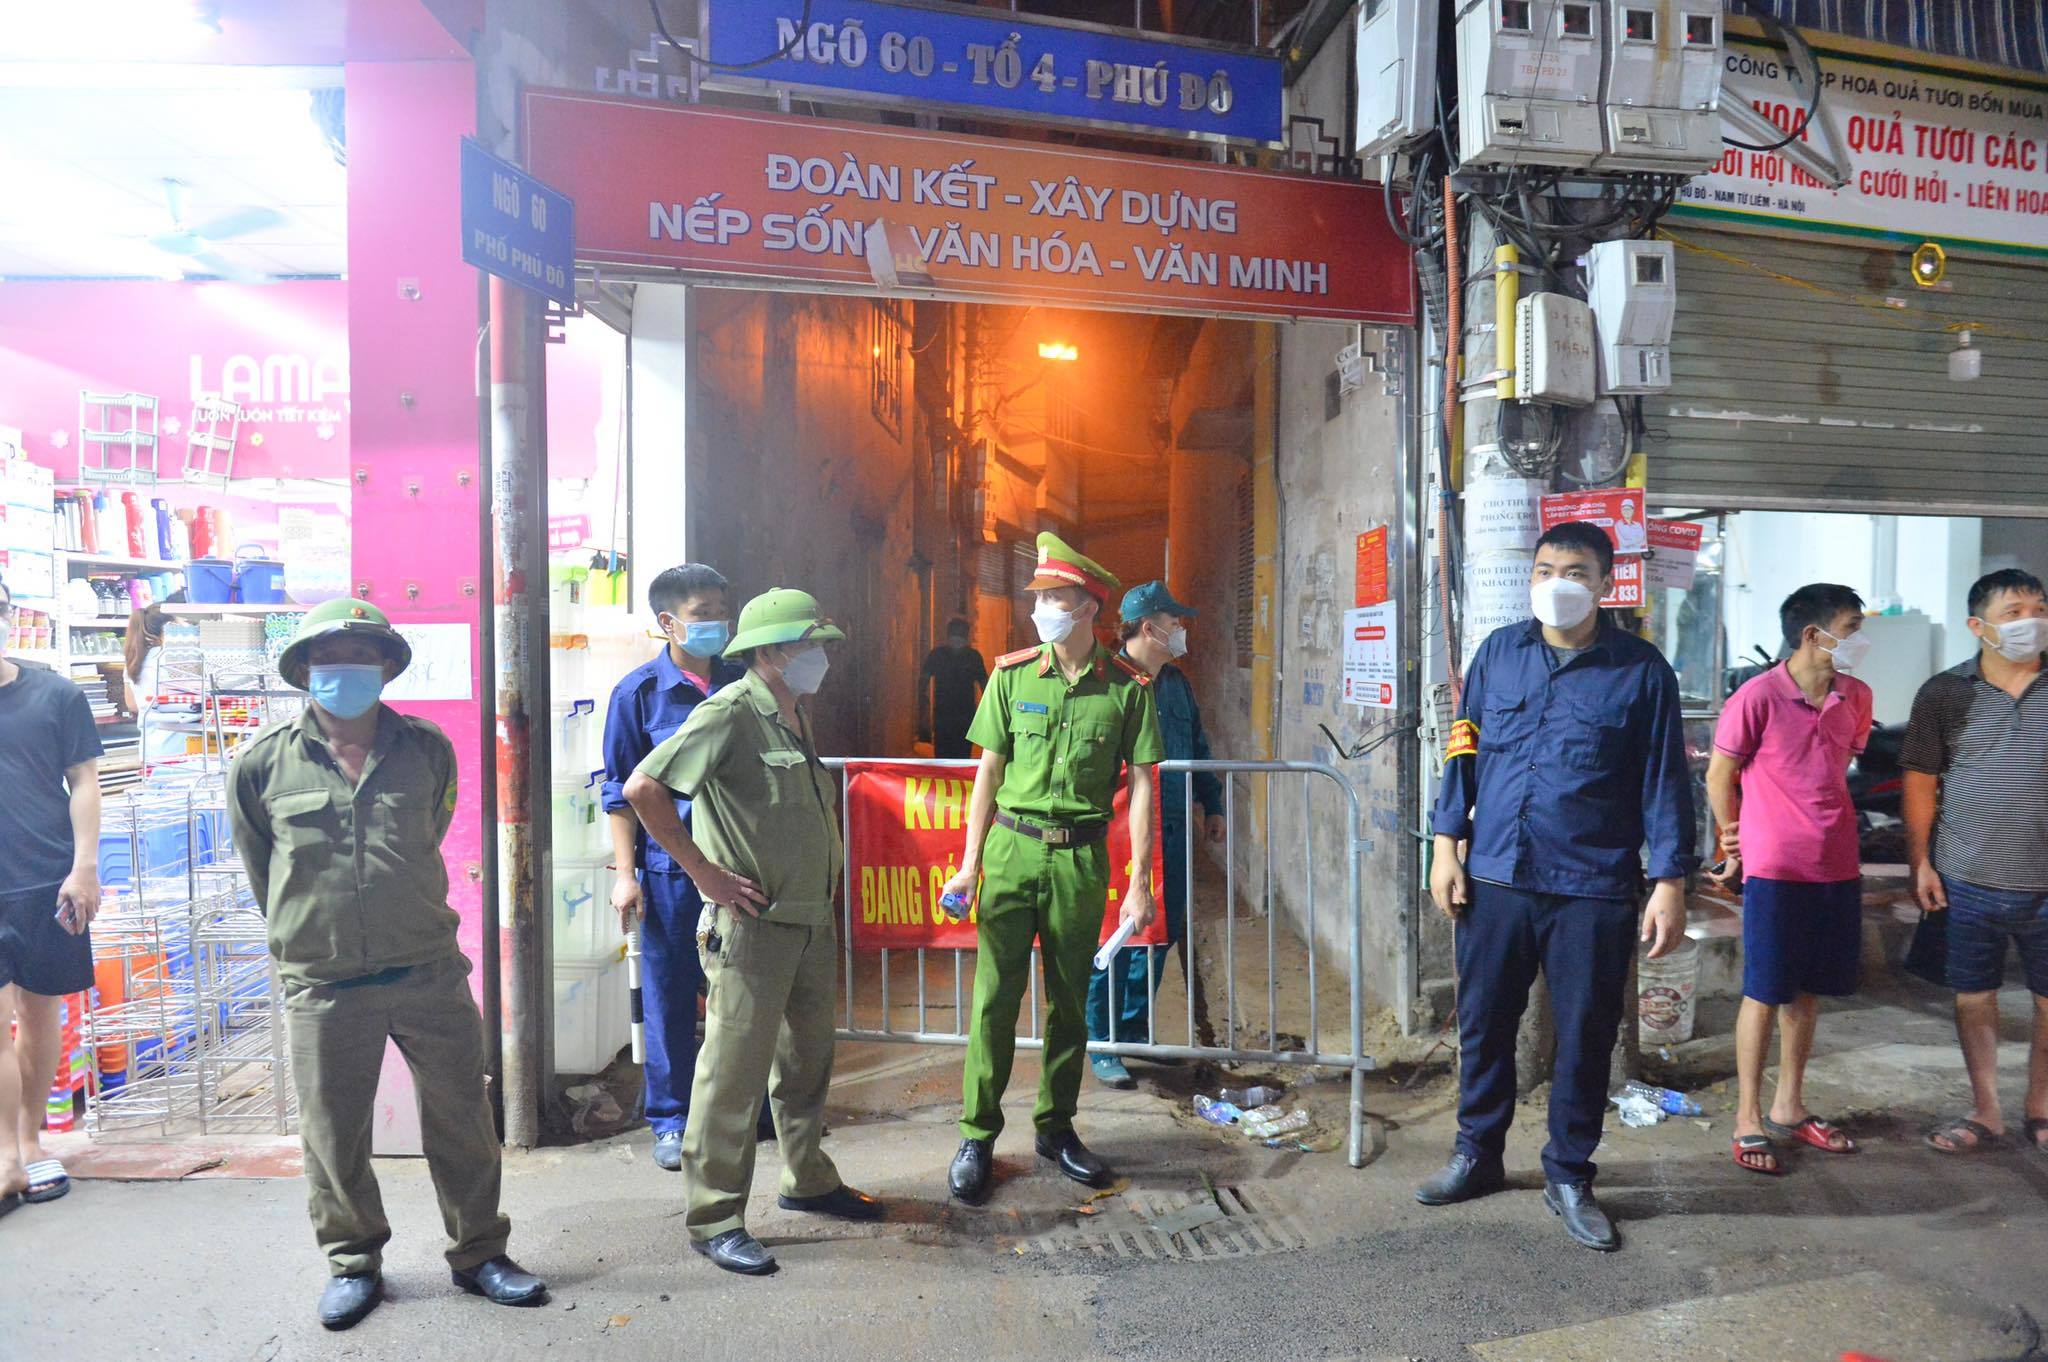 Burning inn in Hanoi: 2-year-old boy was seriously injured, burned 50%